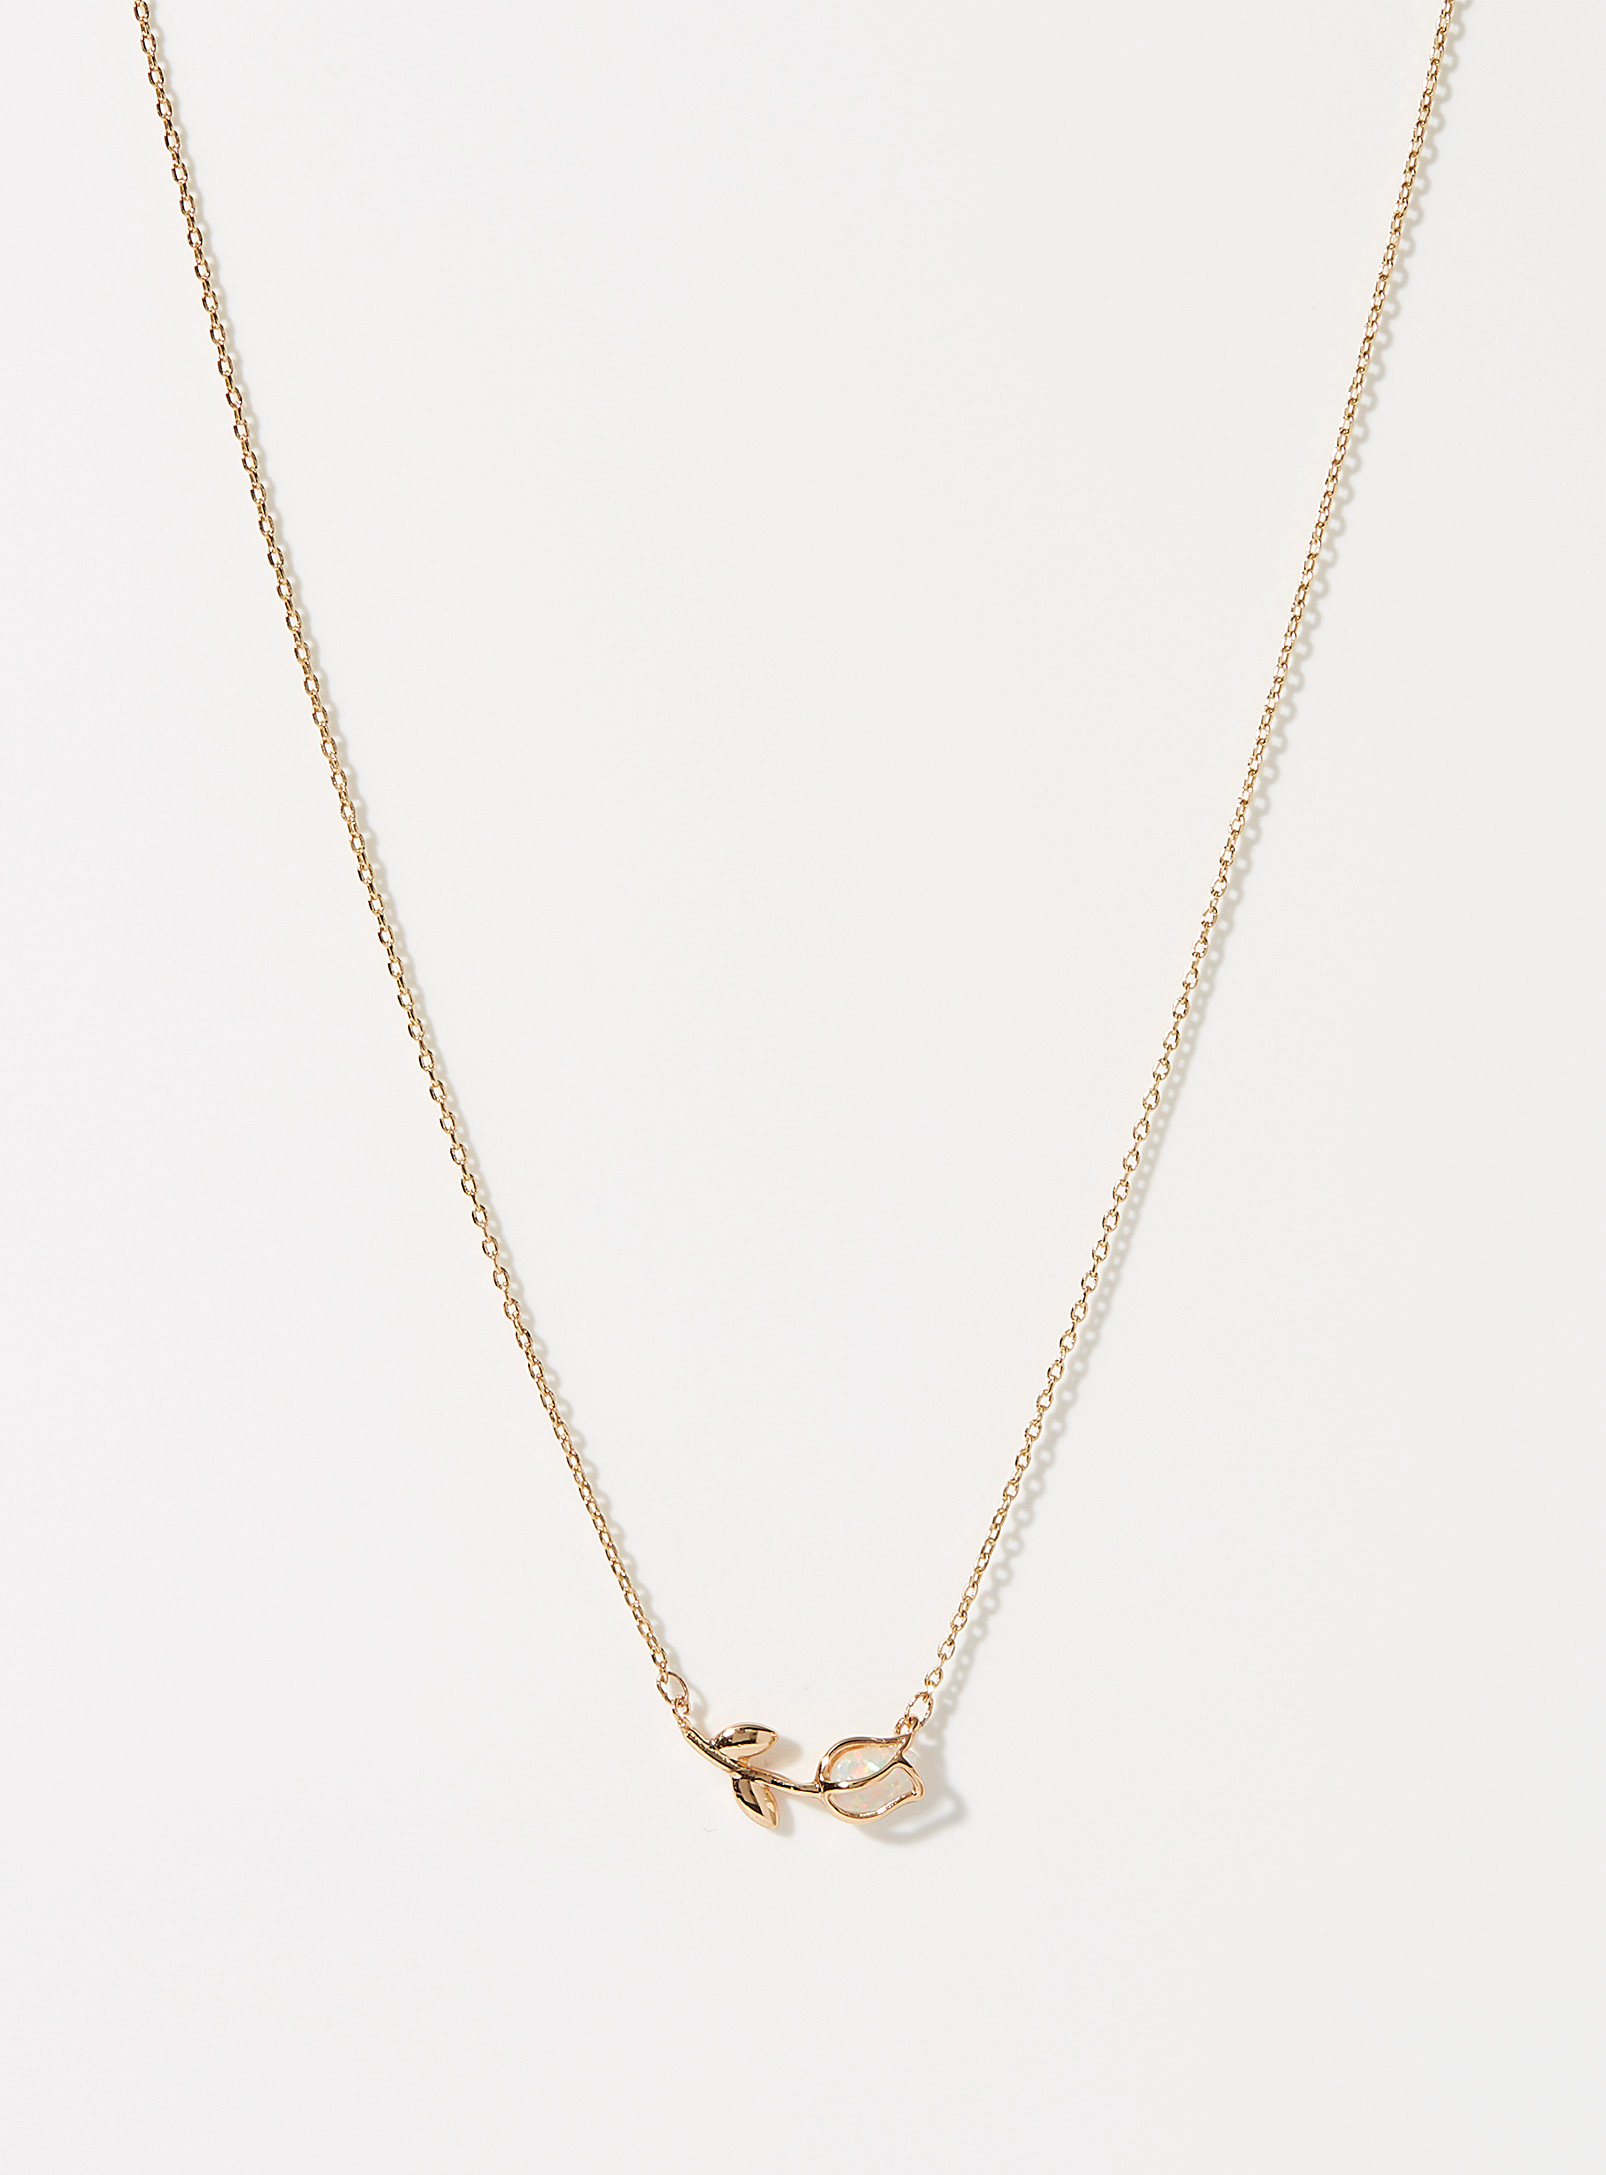 Simons - Women's Iridescent tulip necklace